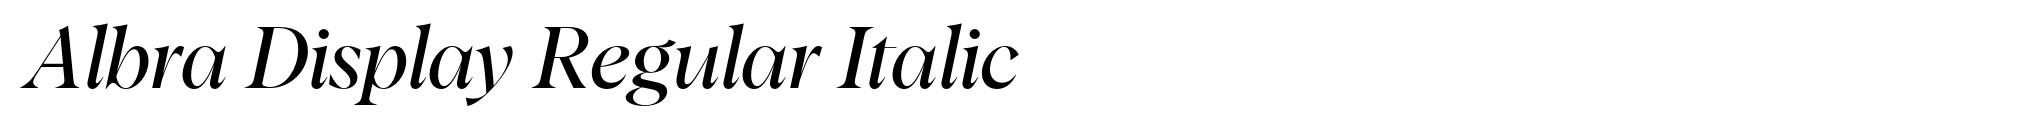 Albra Display Regular Italic image